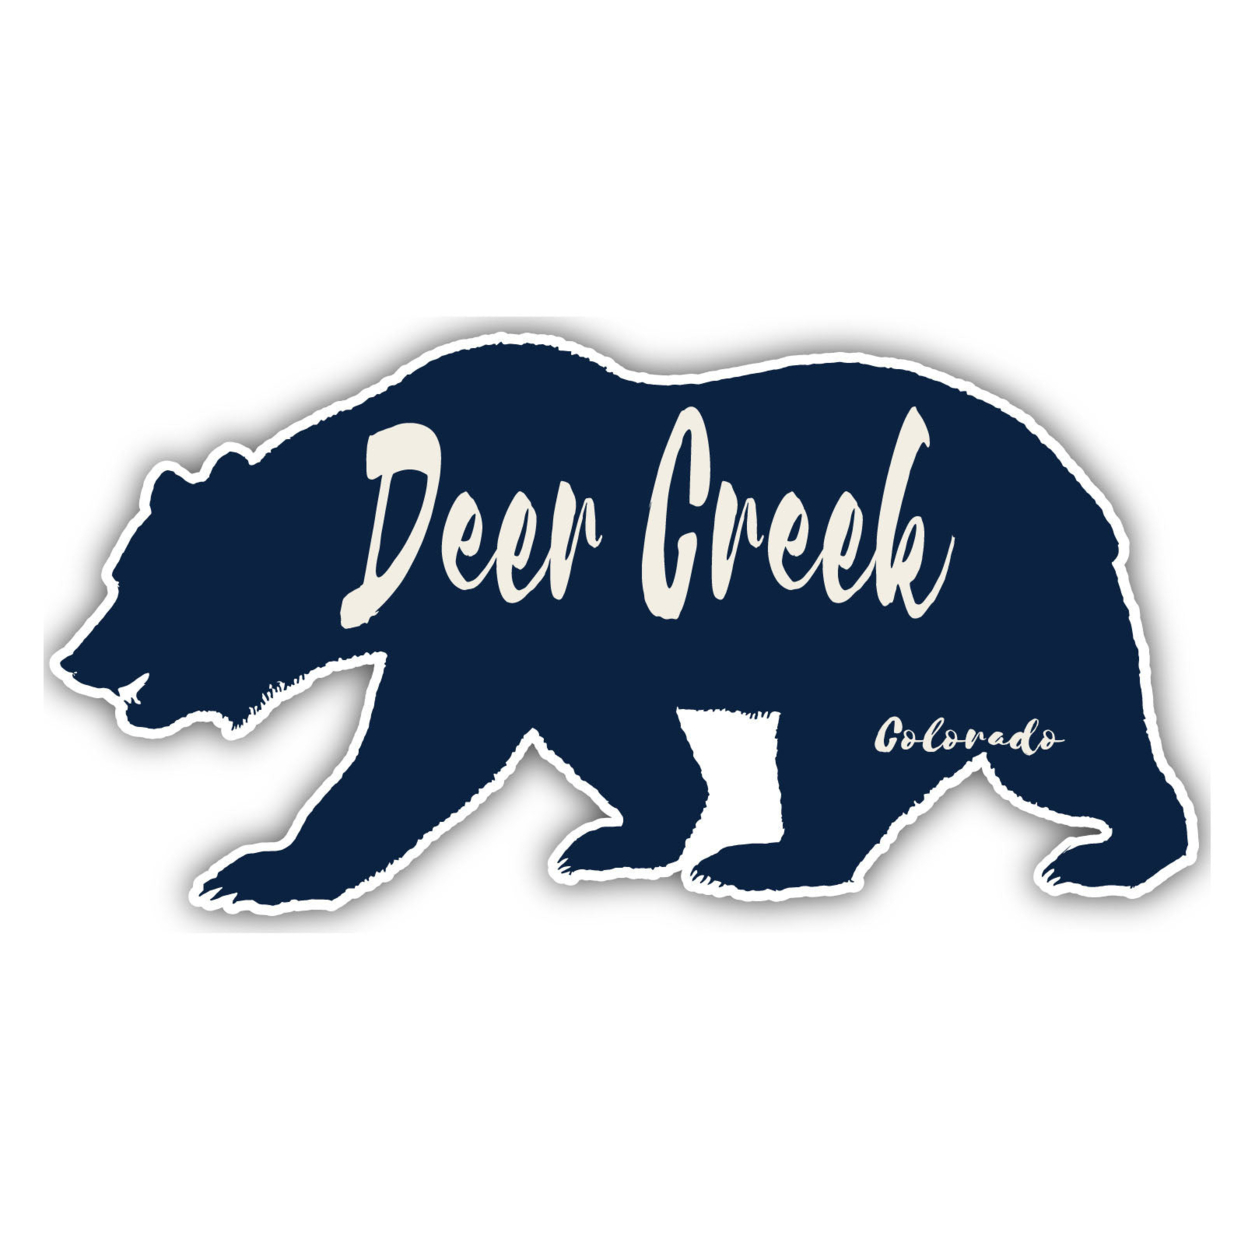 Deer Creek Colorado Souvenir Decorative Stickers (Choose Theme And Size) - 4-Pack, 4-Inch, Bear